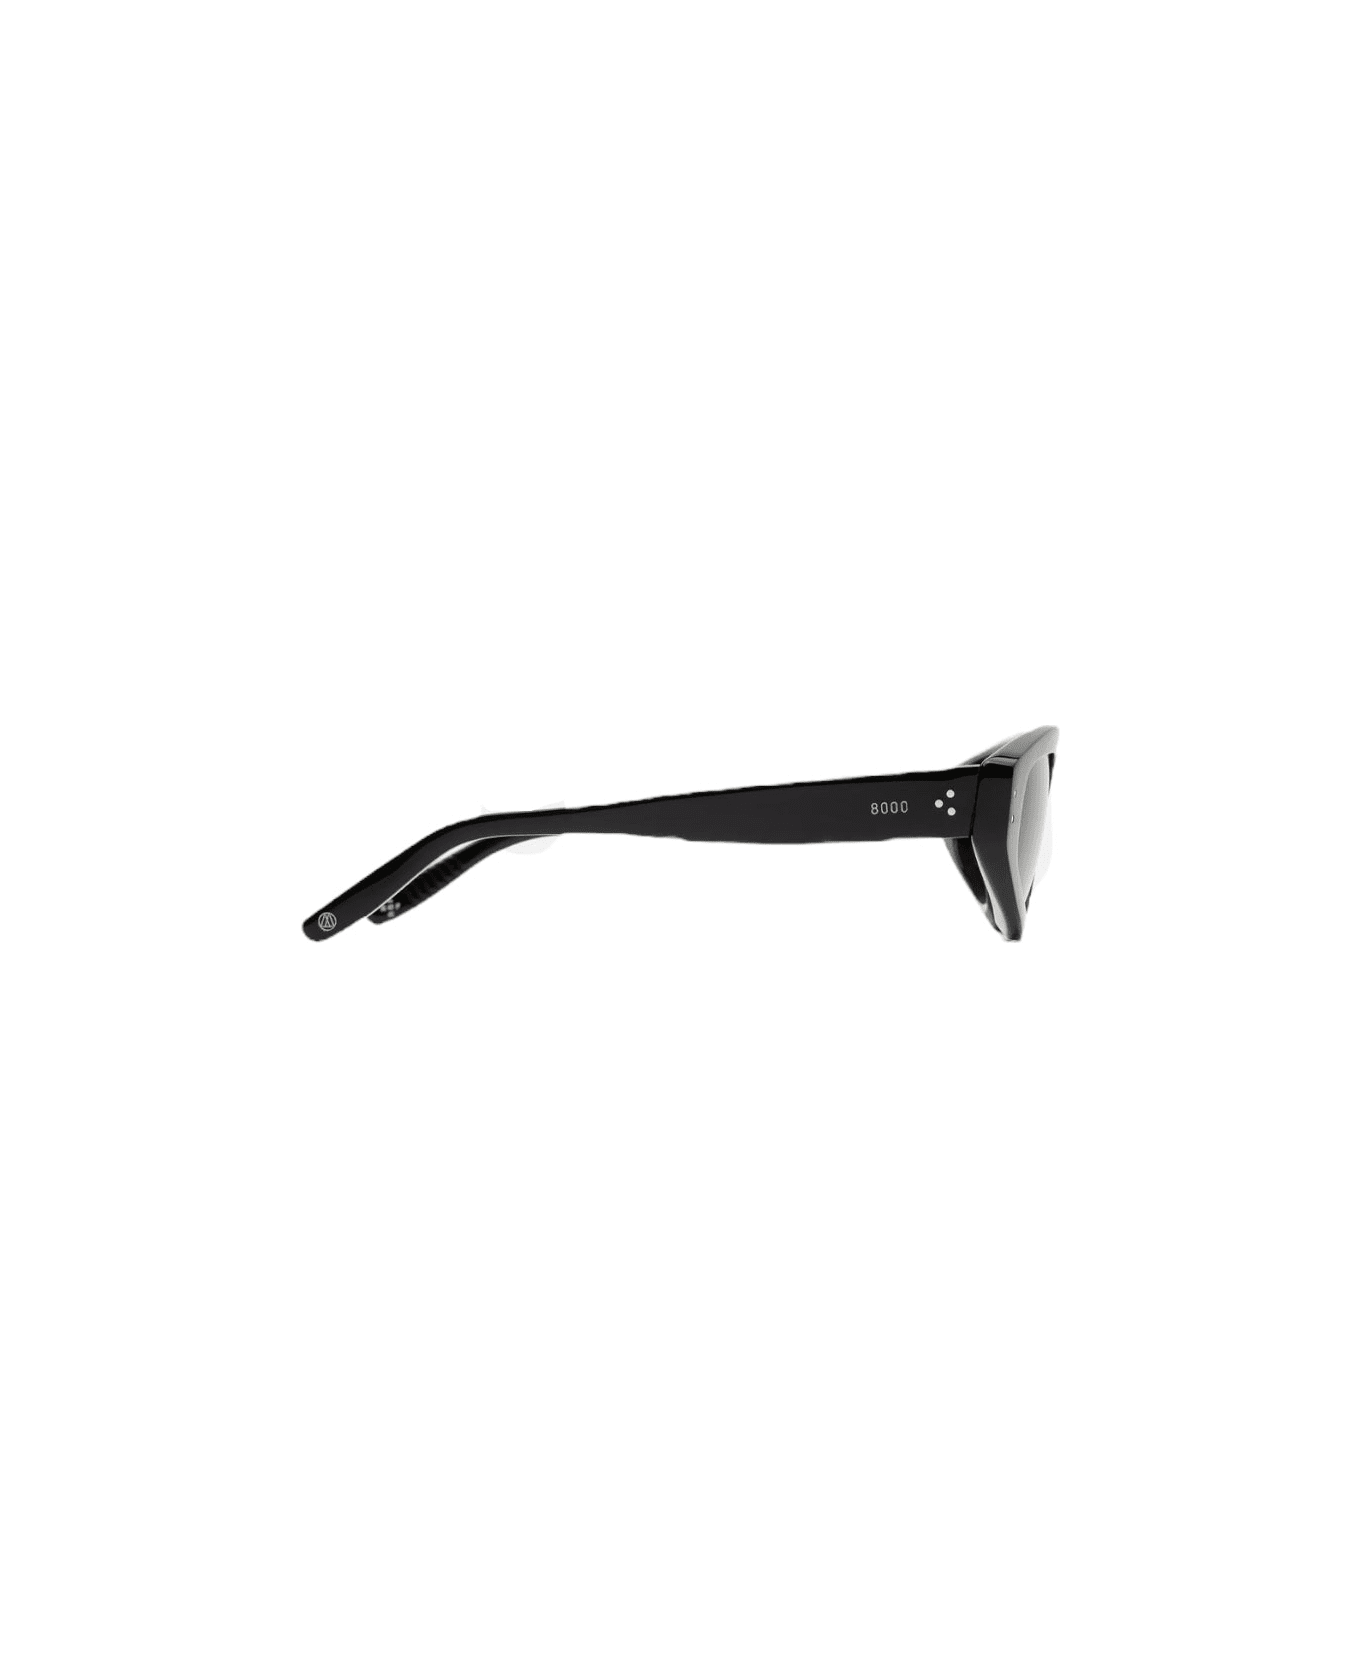 RETROSUPERFUTURE Lime - Limited Edition - Black Sunglasses